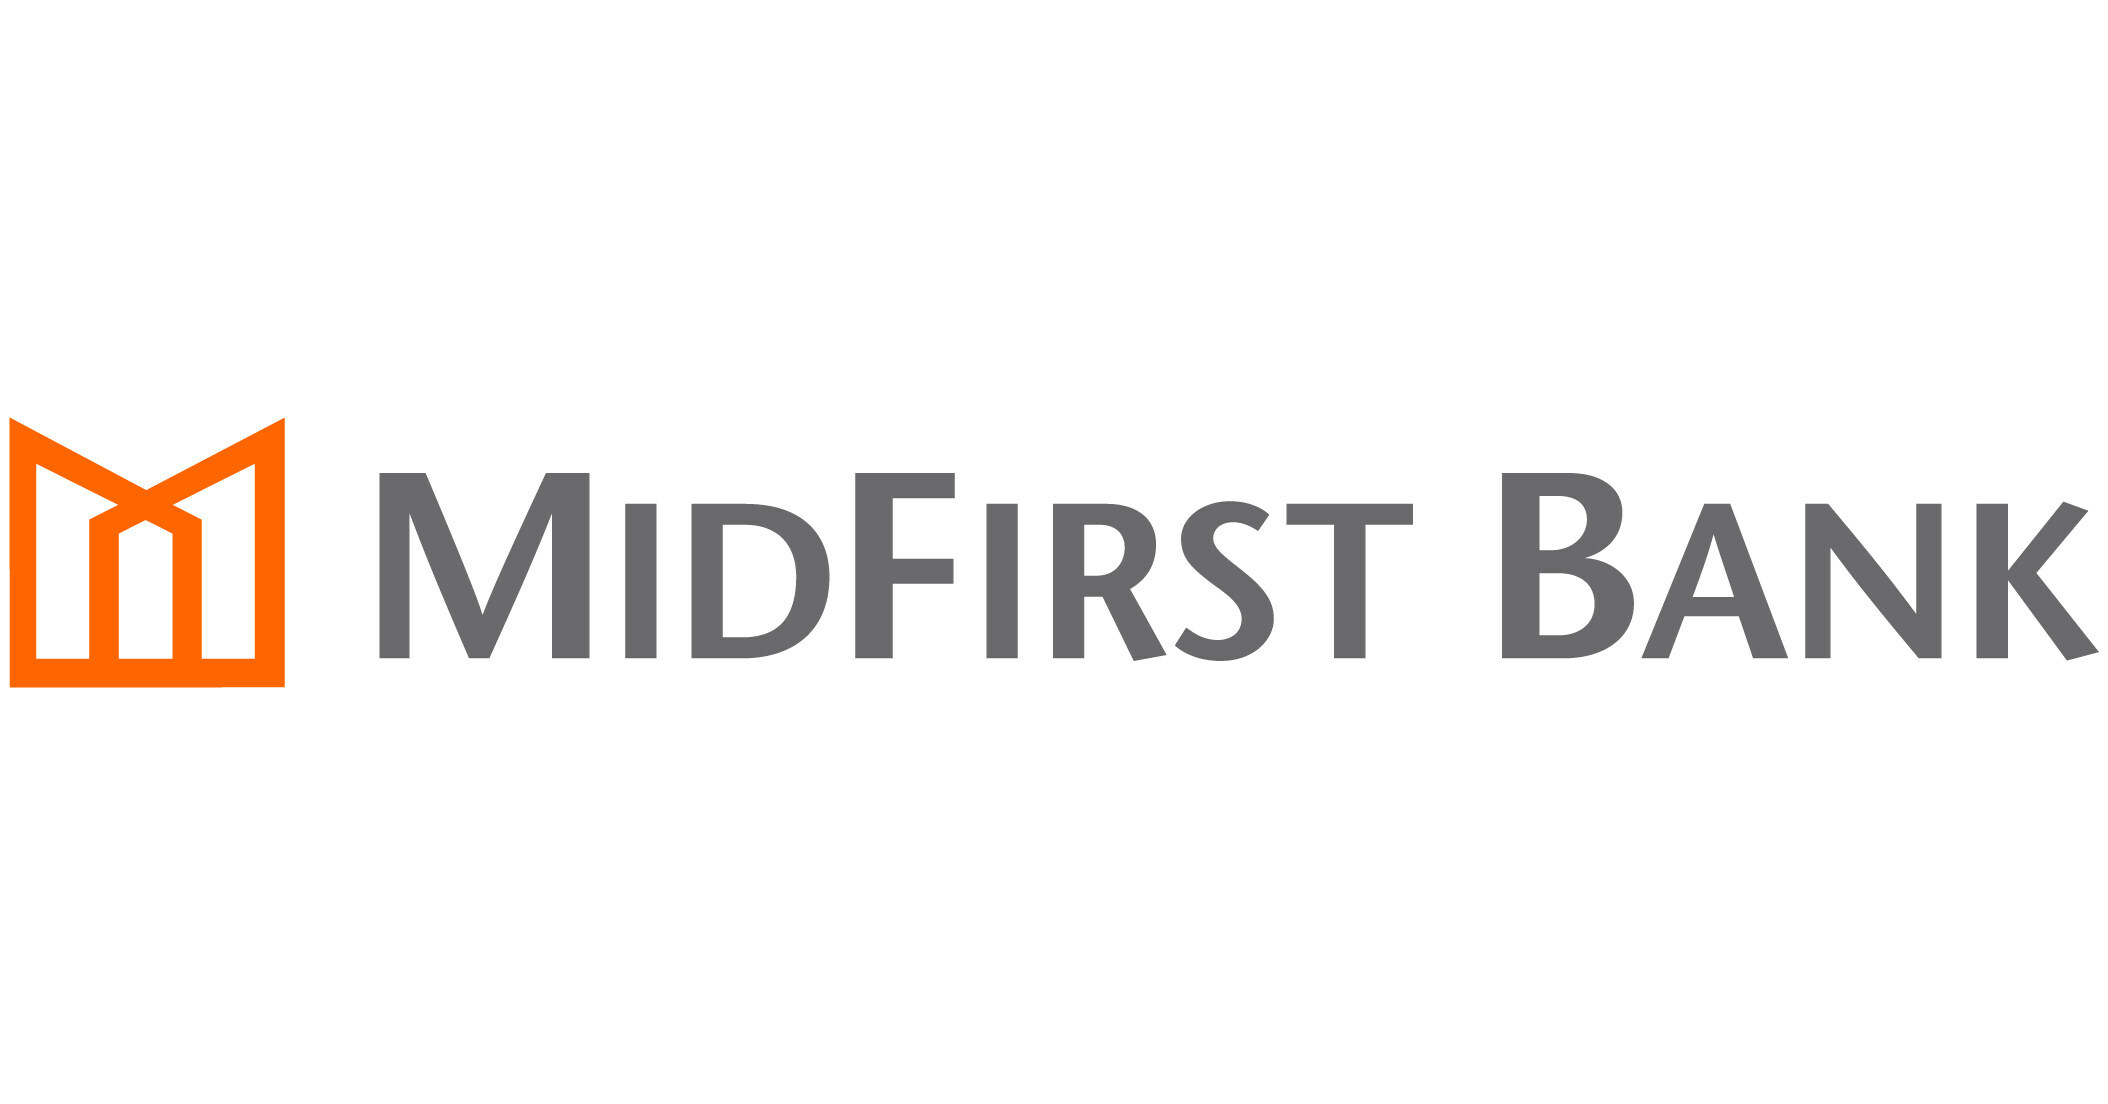 MidFirst Bank Receives 2018 J.D. Power Highest Retail Banking Customer